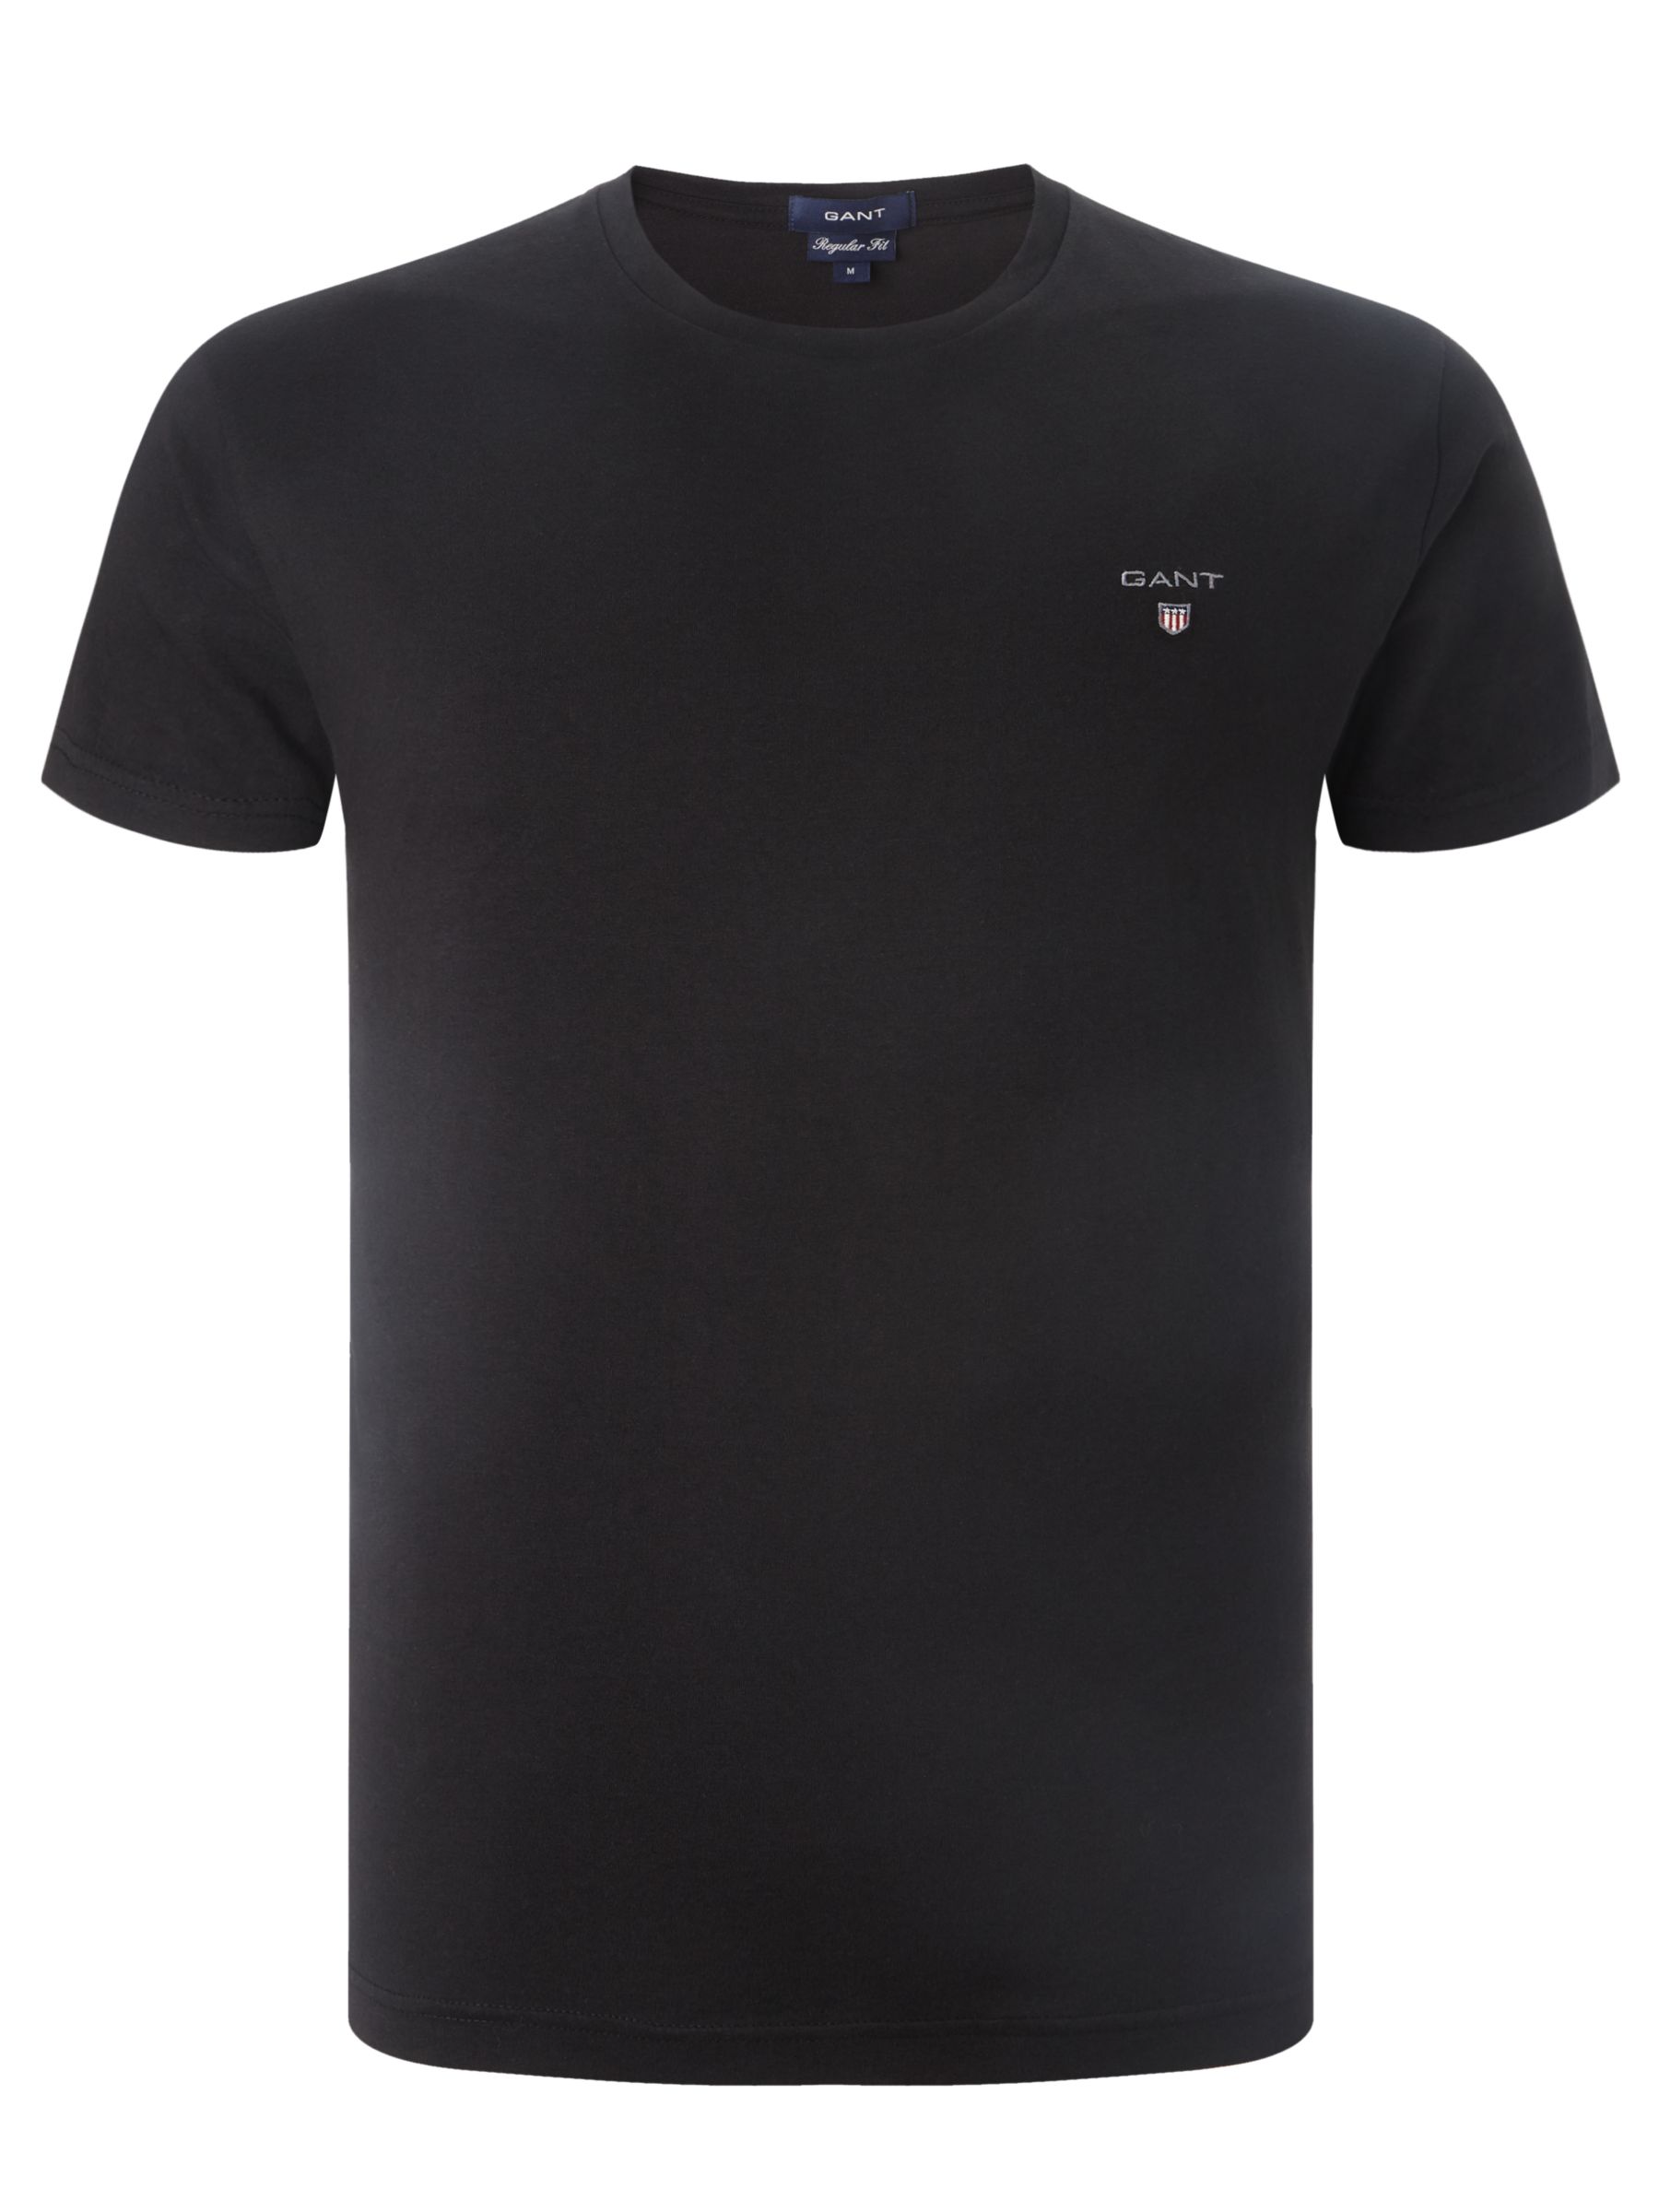 GANT Cotton Crew Neck T-Shirt, Black at John Lewis & Partners